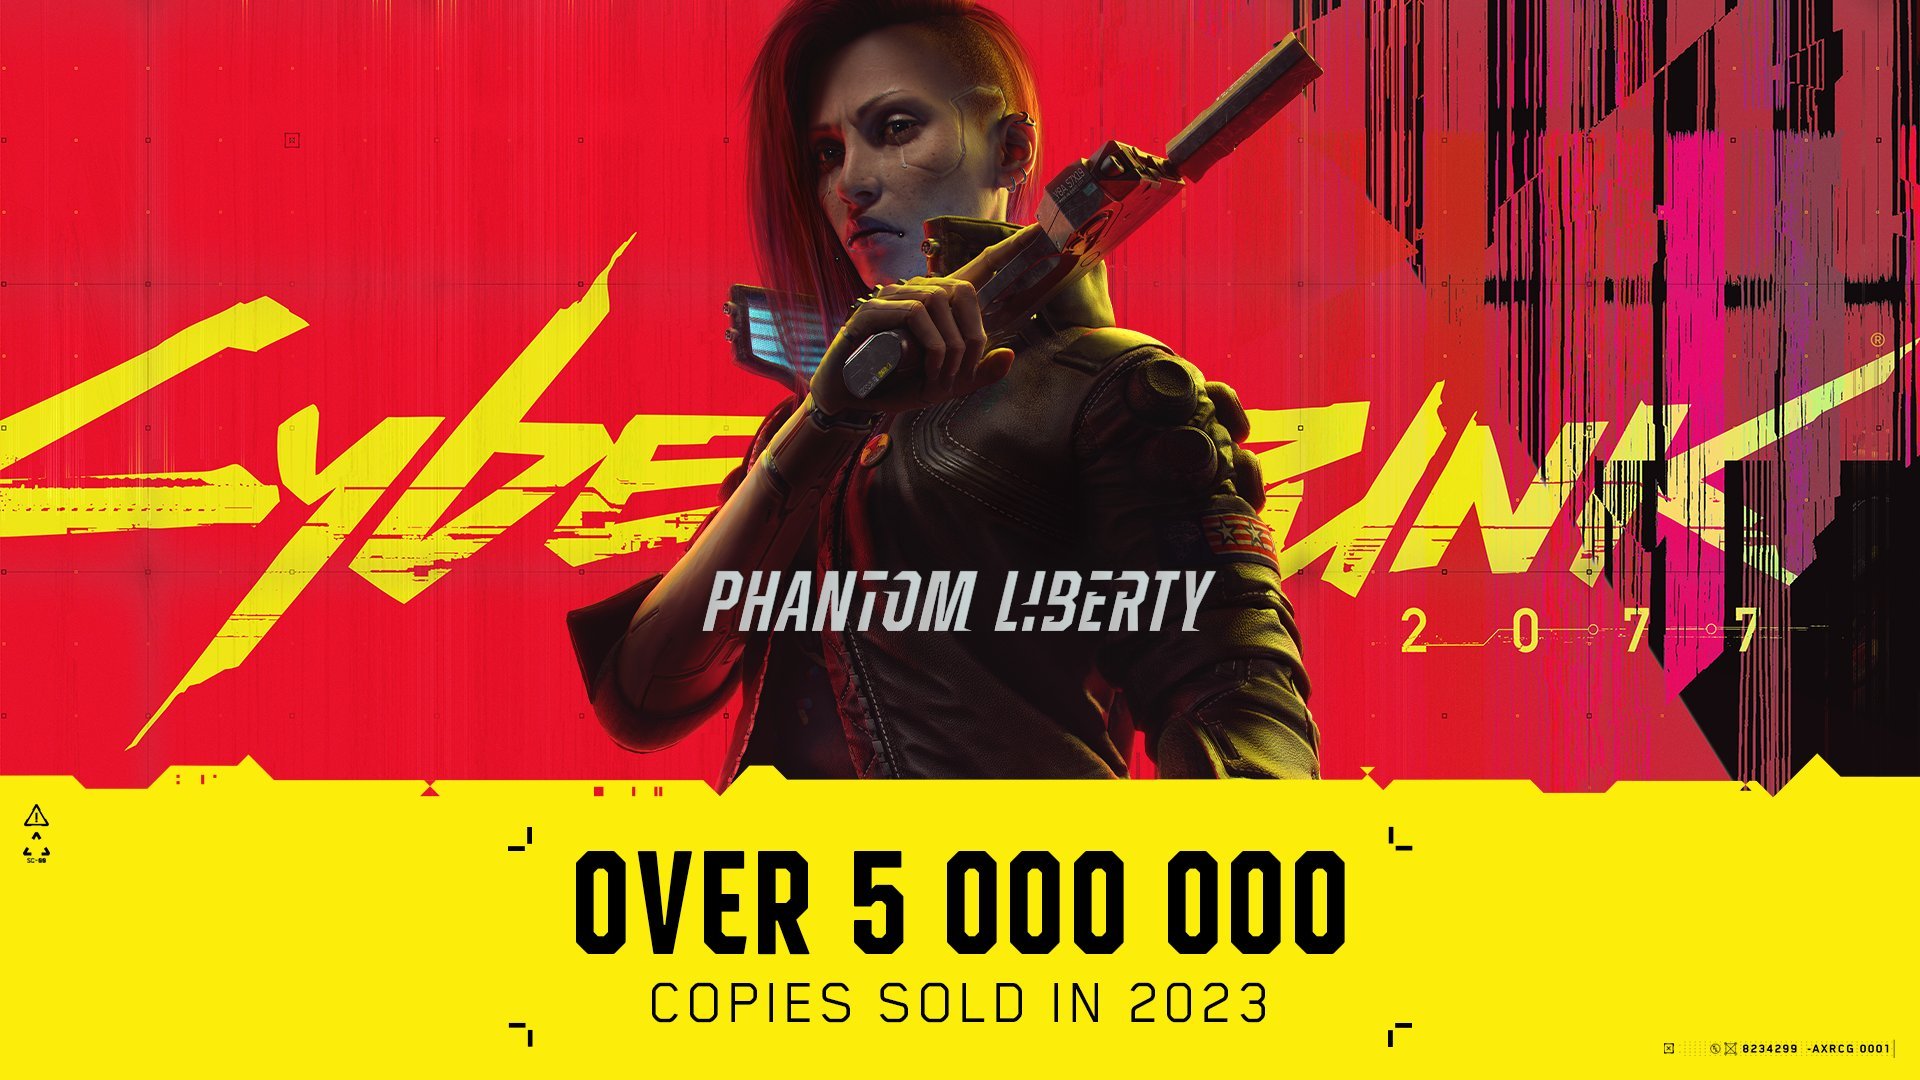 Cyberpunk 2077 expansion ‘Phantom Liberty’ sales top five million